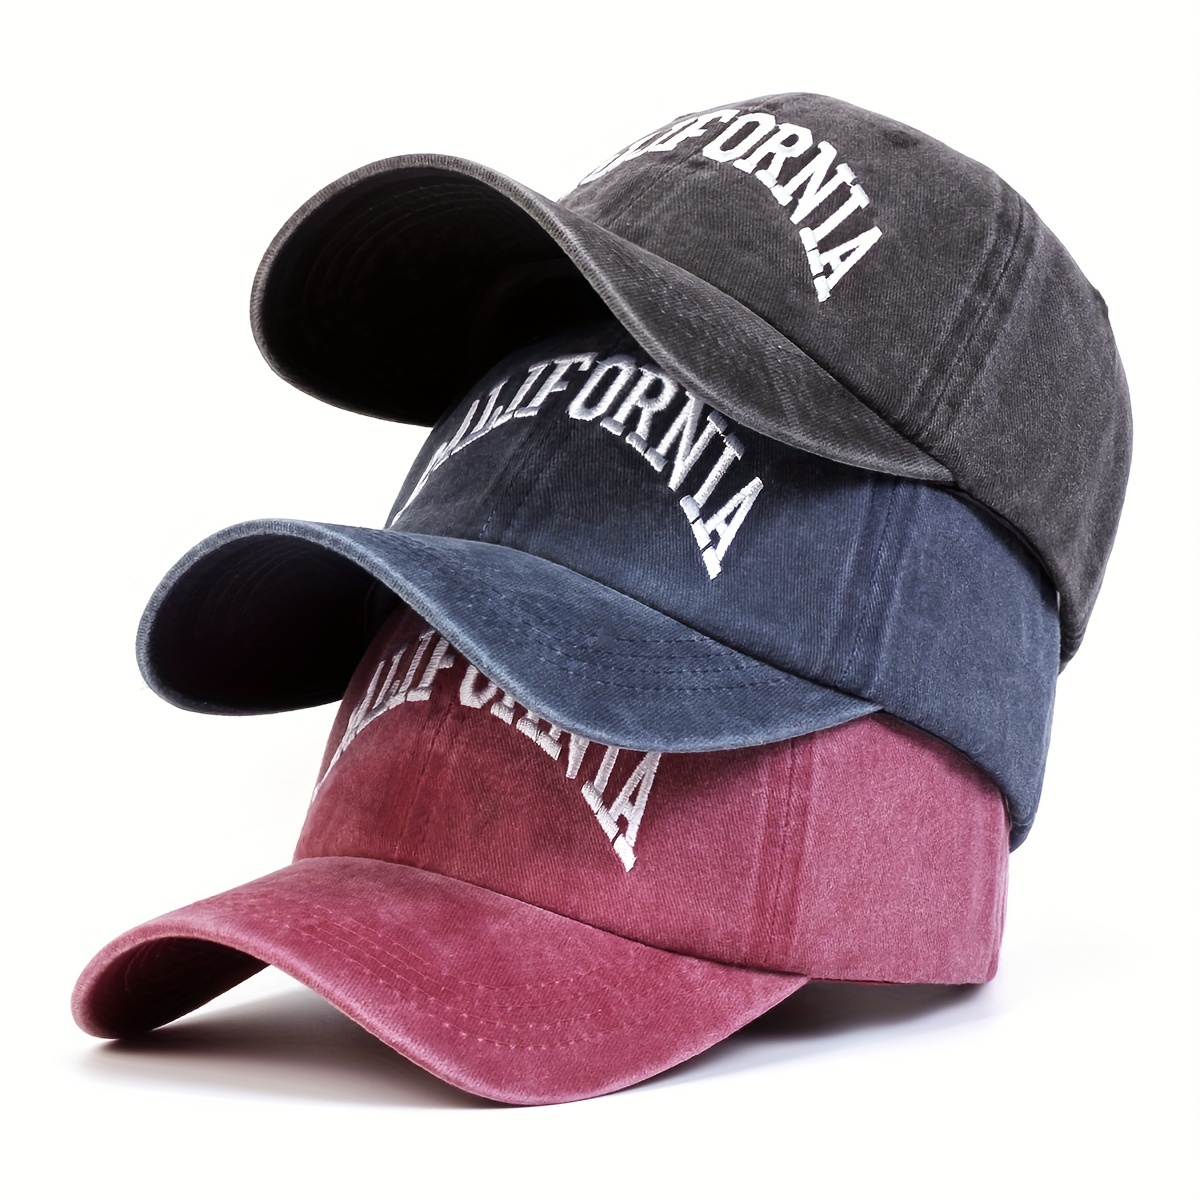 Gorras de béisbol para hombre California - CA bordado sombrero de papá  sombrero de algodón lavado